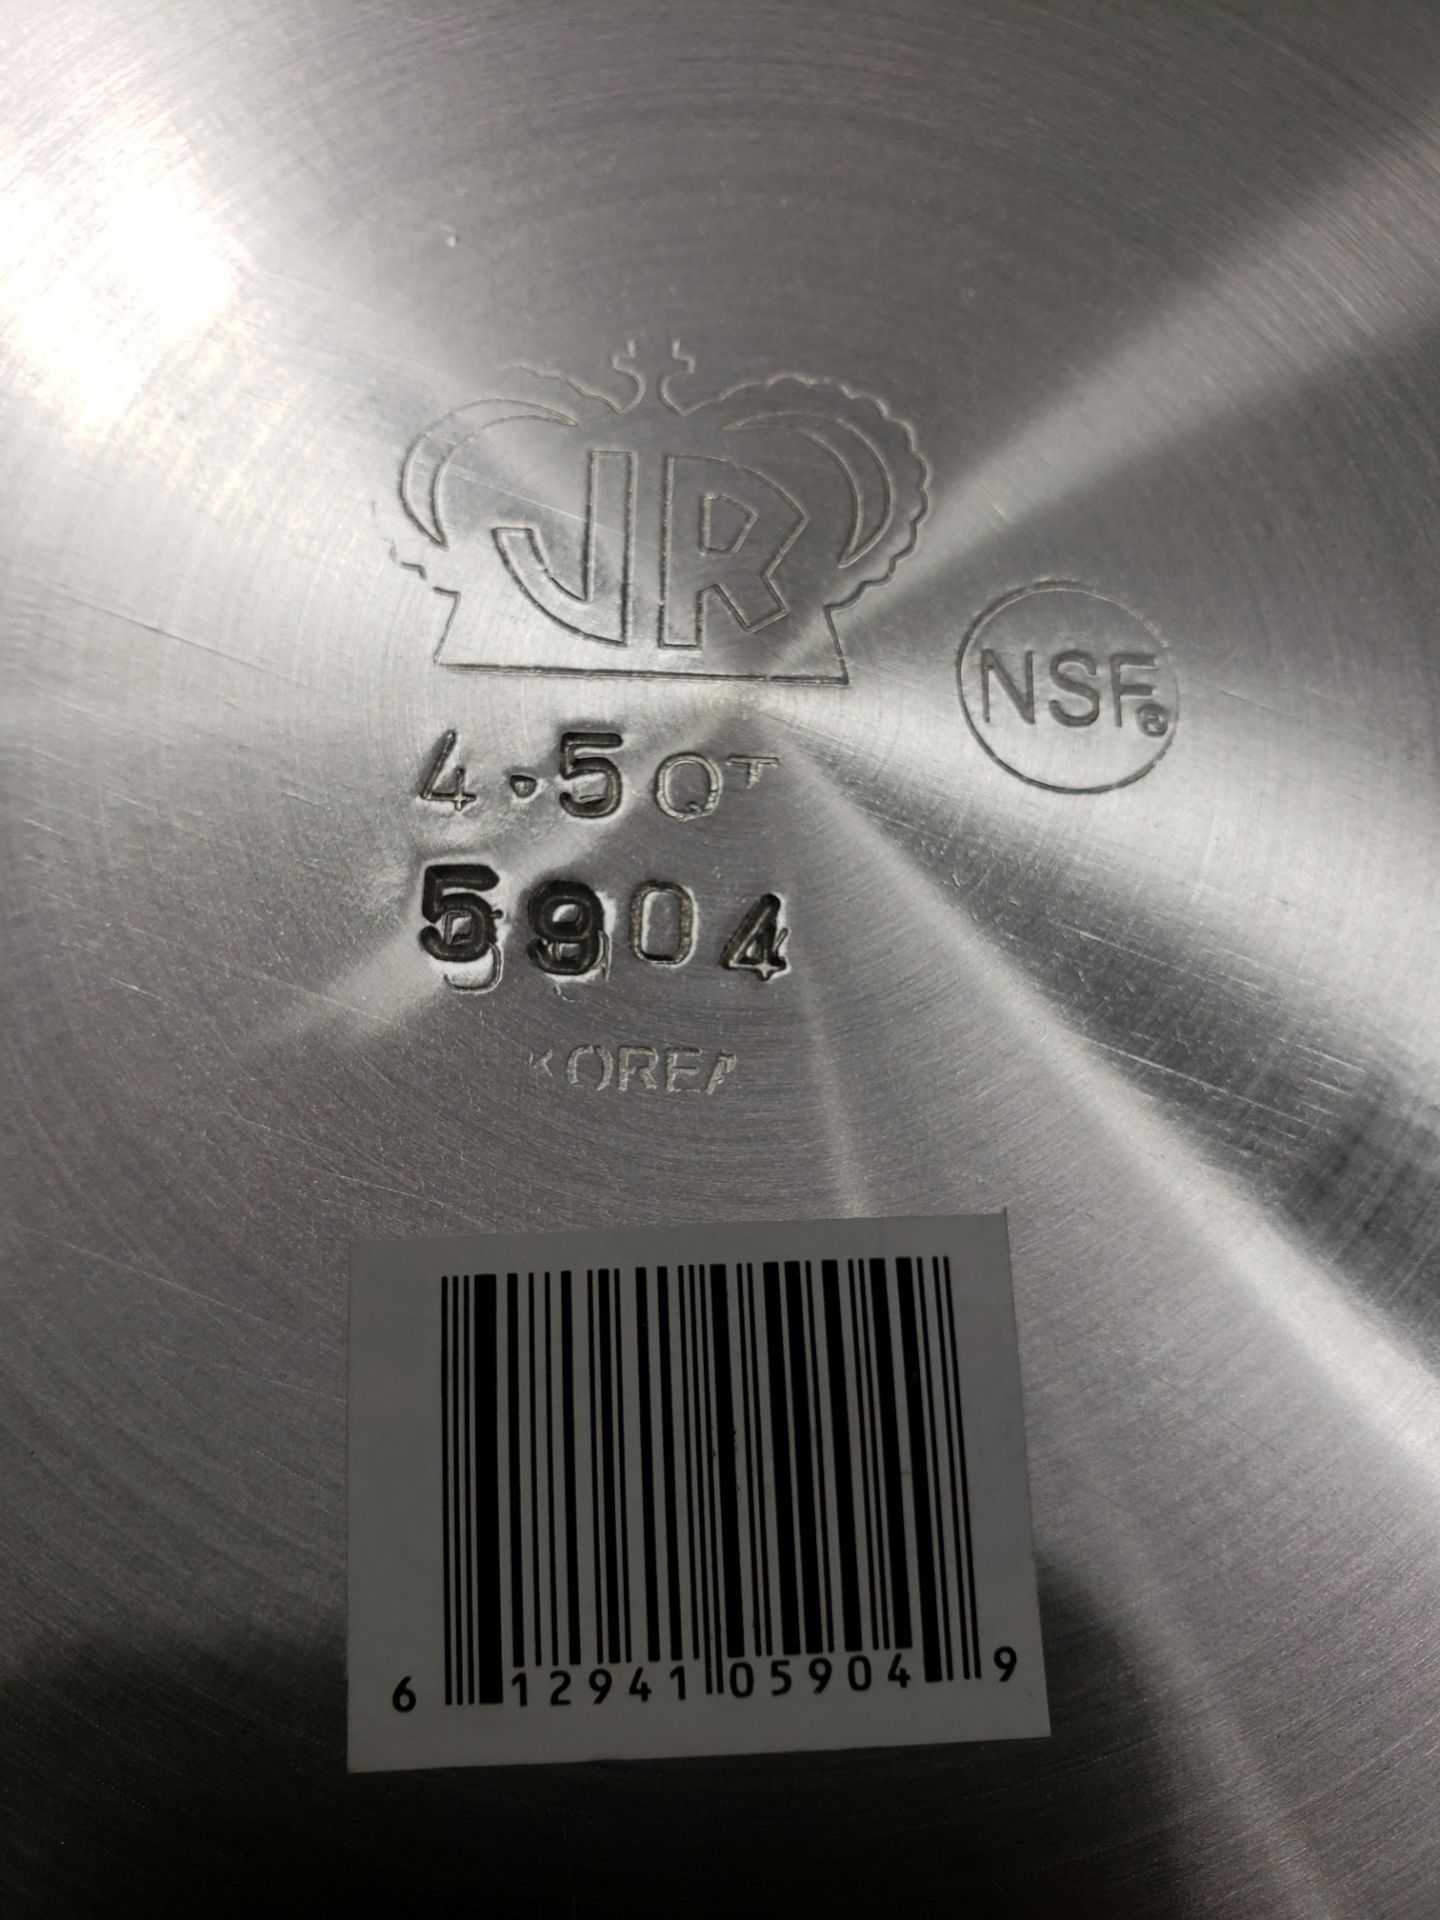 4.5qt Tapered Aluminum Sauce Pot, Johnson-Rose 5904 - Image 3 of 3